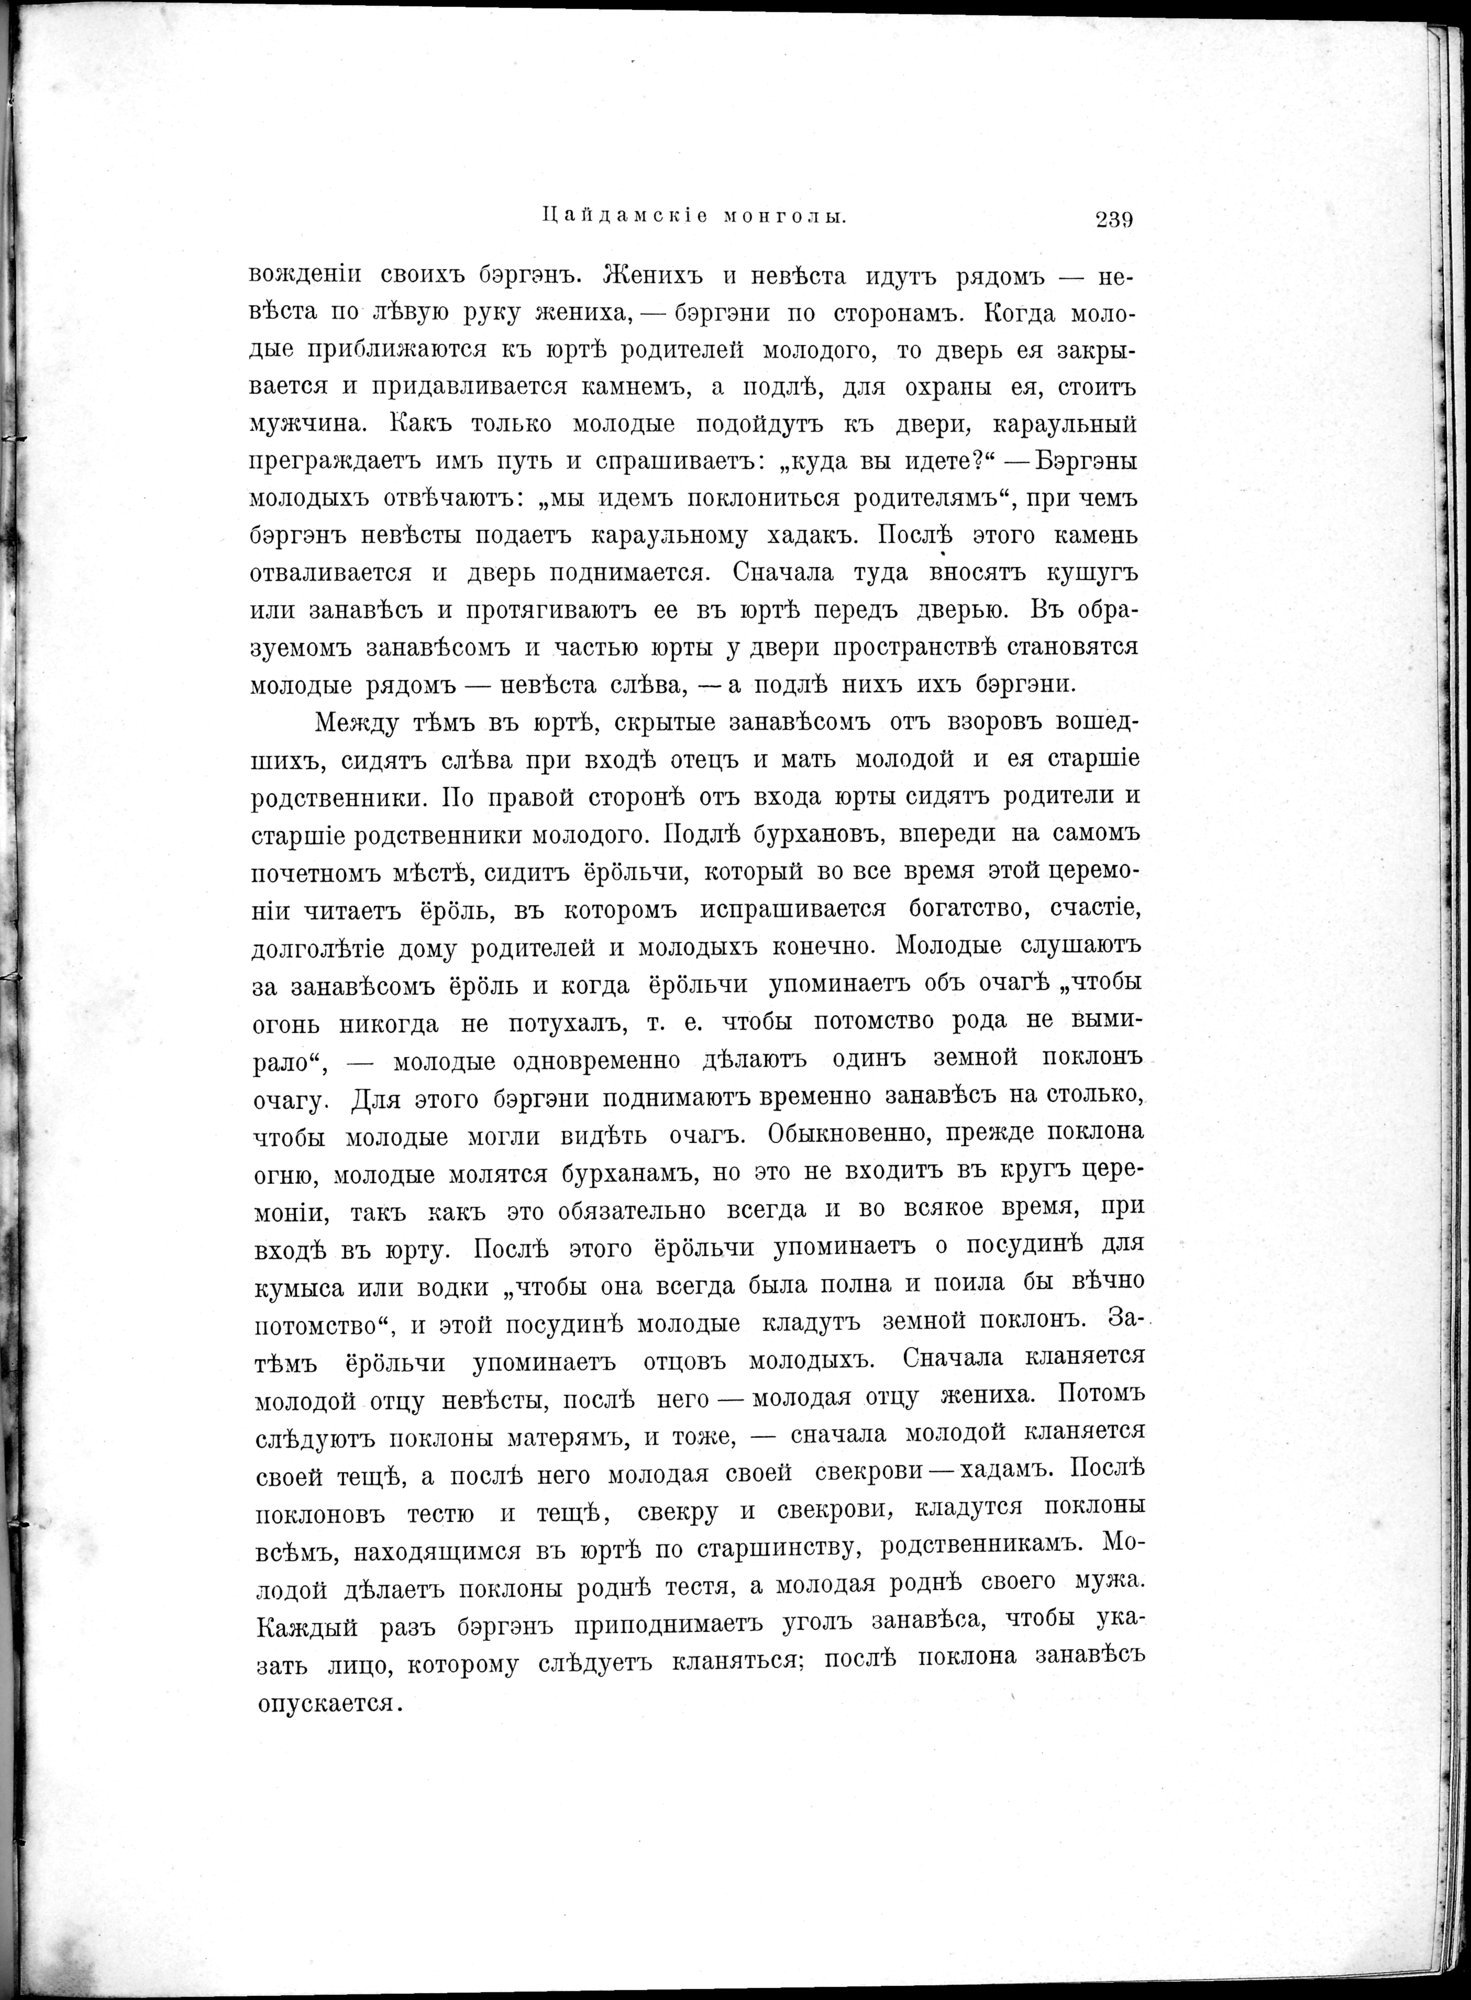 Mongoliia i Kam : vol.1 / Page 291 (Grayscale High Resolution Image)